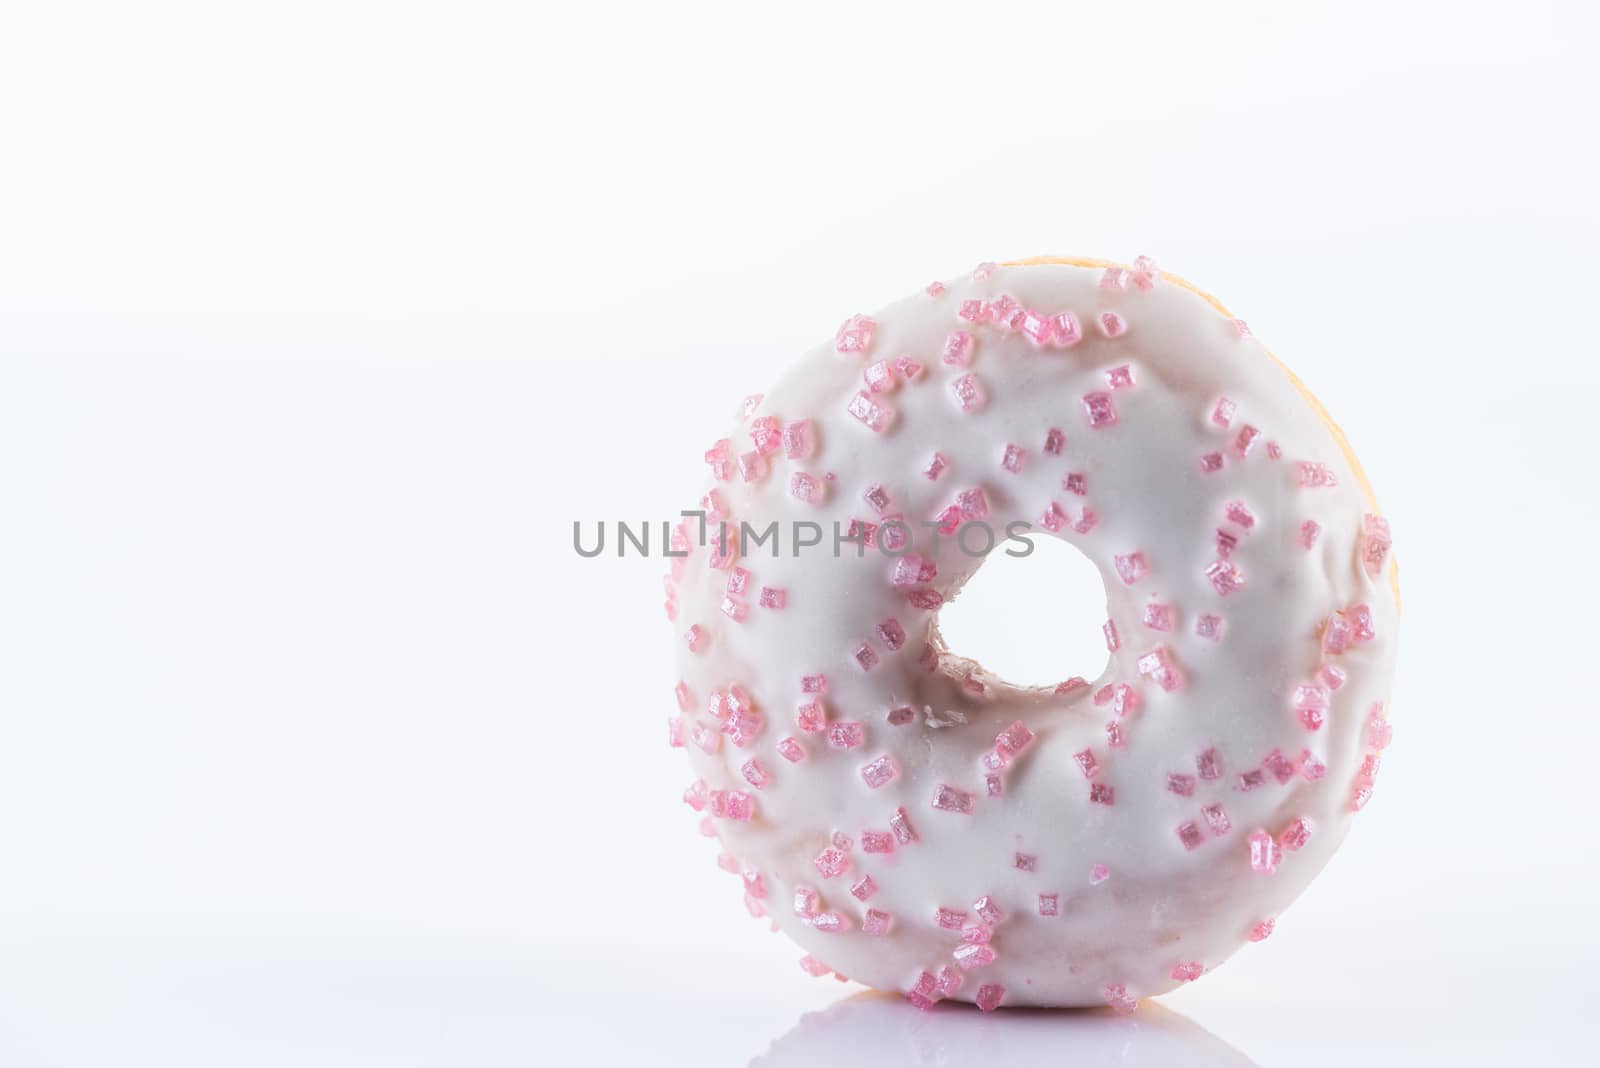 Single White Chocolate Donut or Doughnut. Studio Photo on White Background, Close Up view.